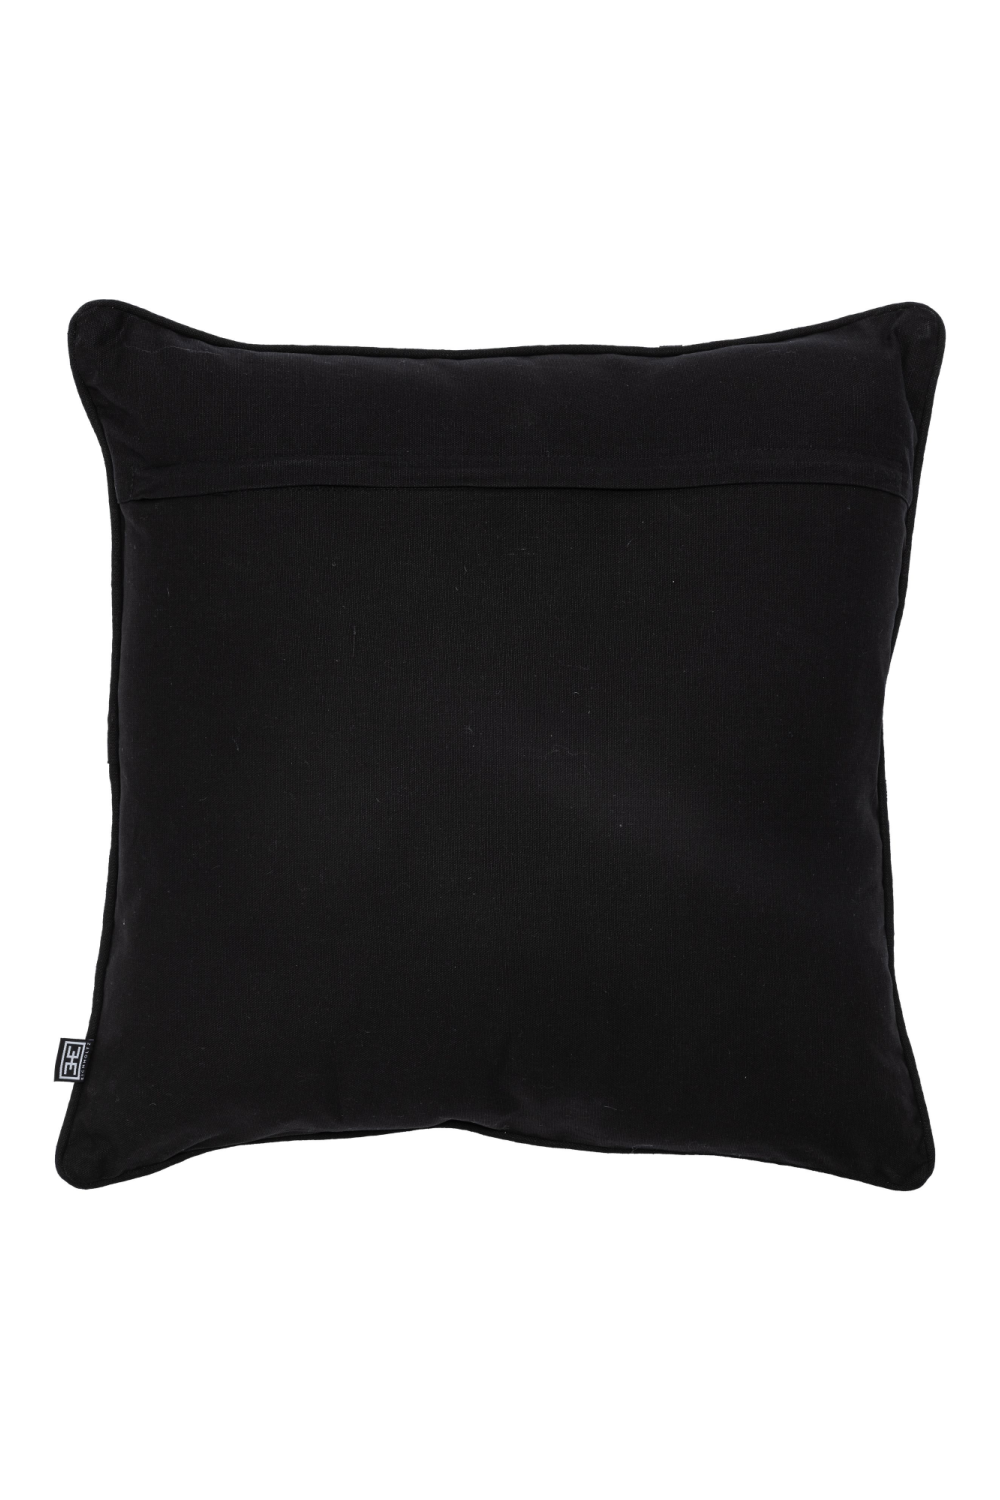 Black & White Square Pillow | Eichholtz Spray | Oroa.com